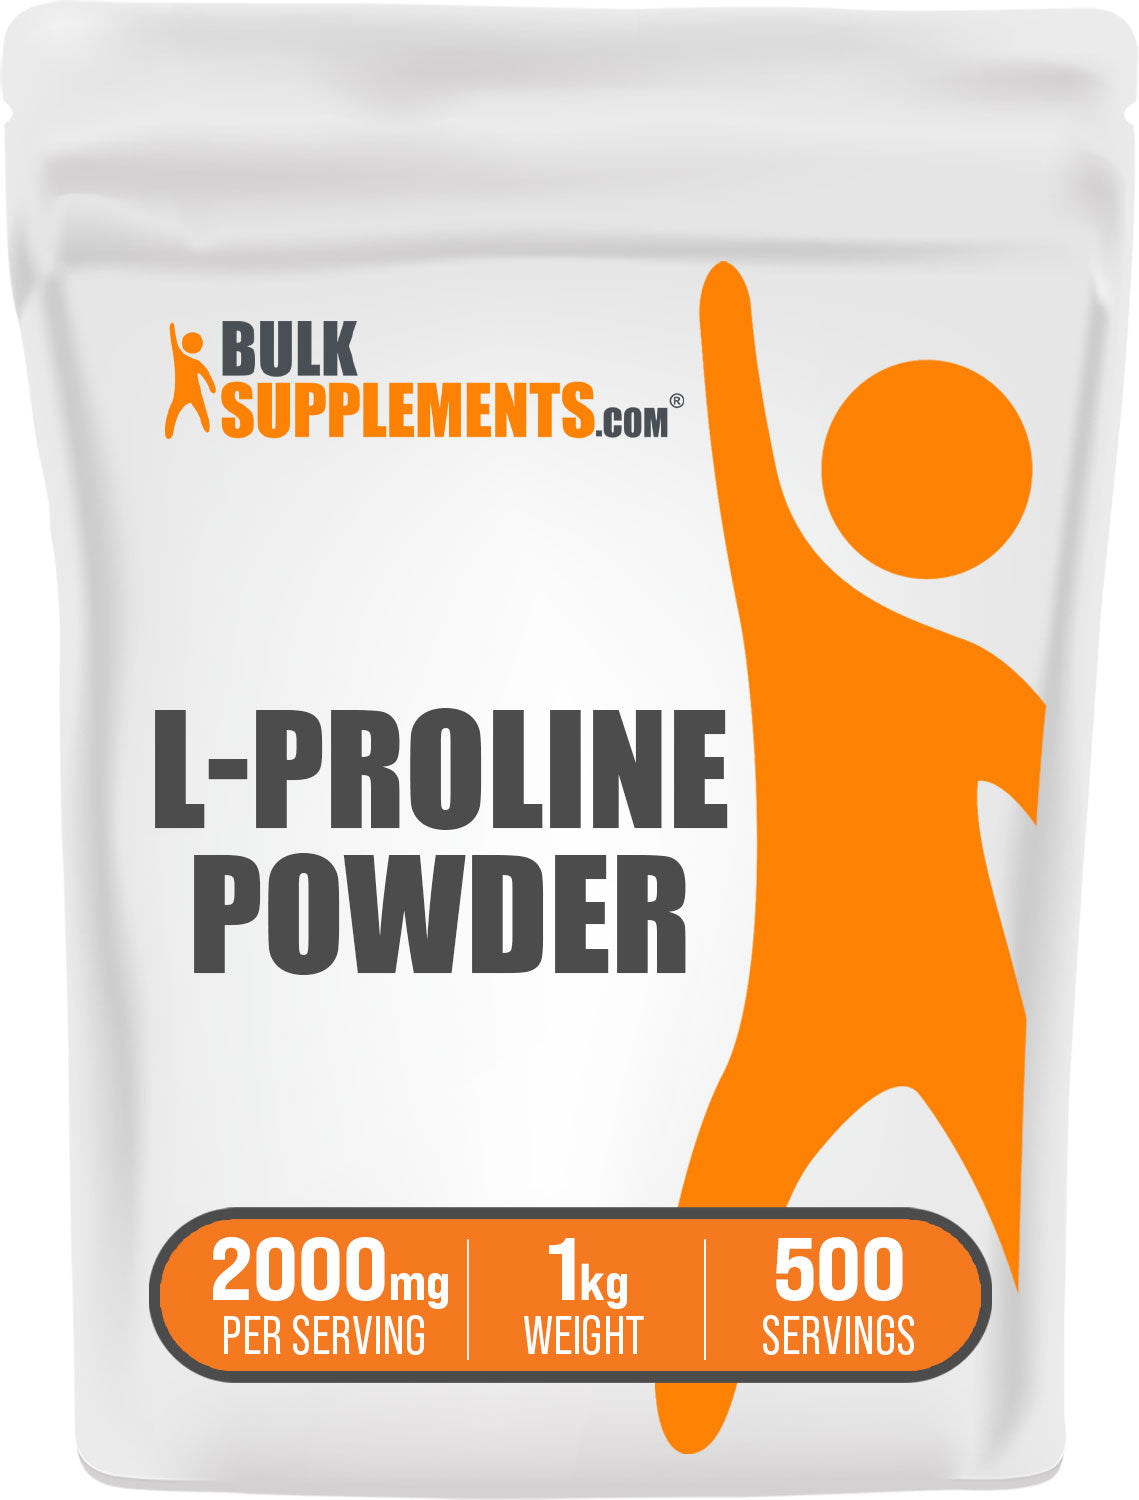 L Proline Powder 1kg